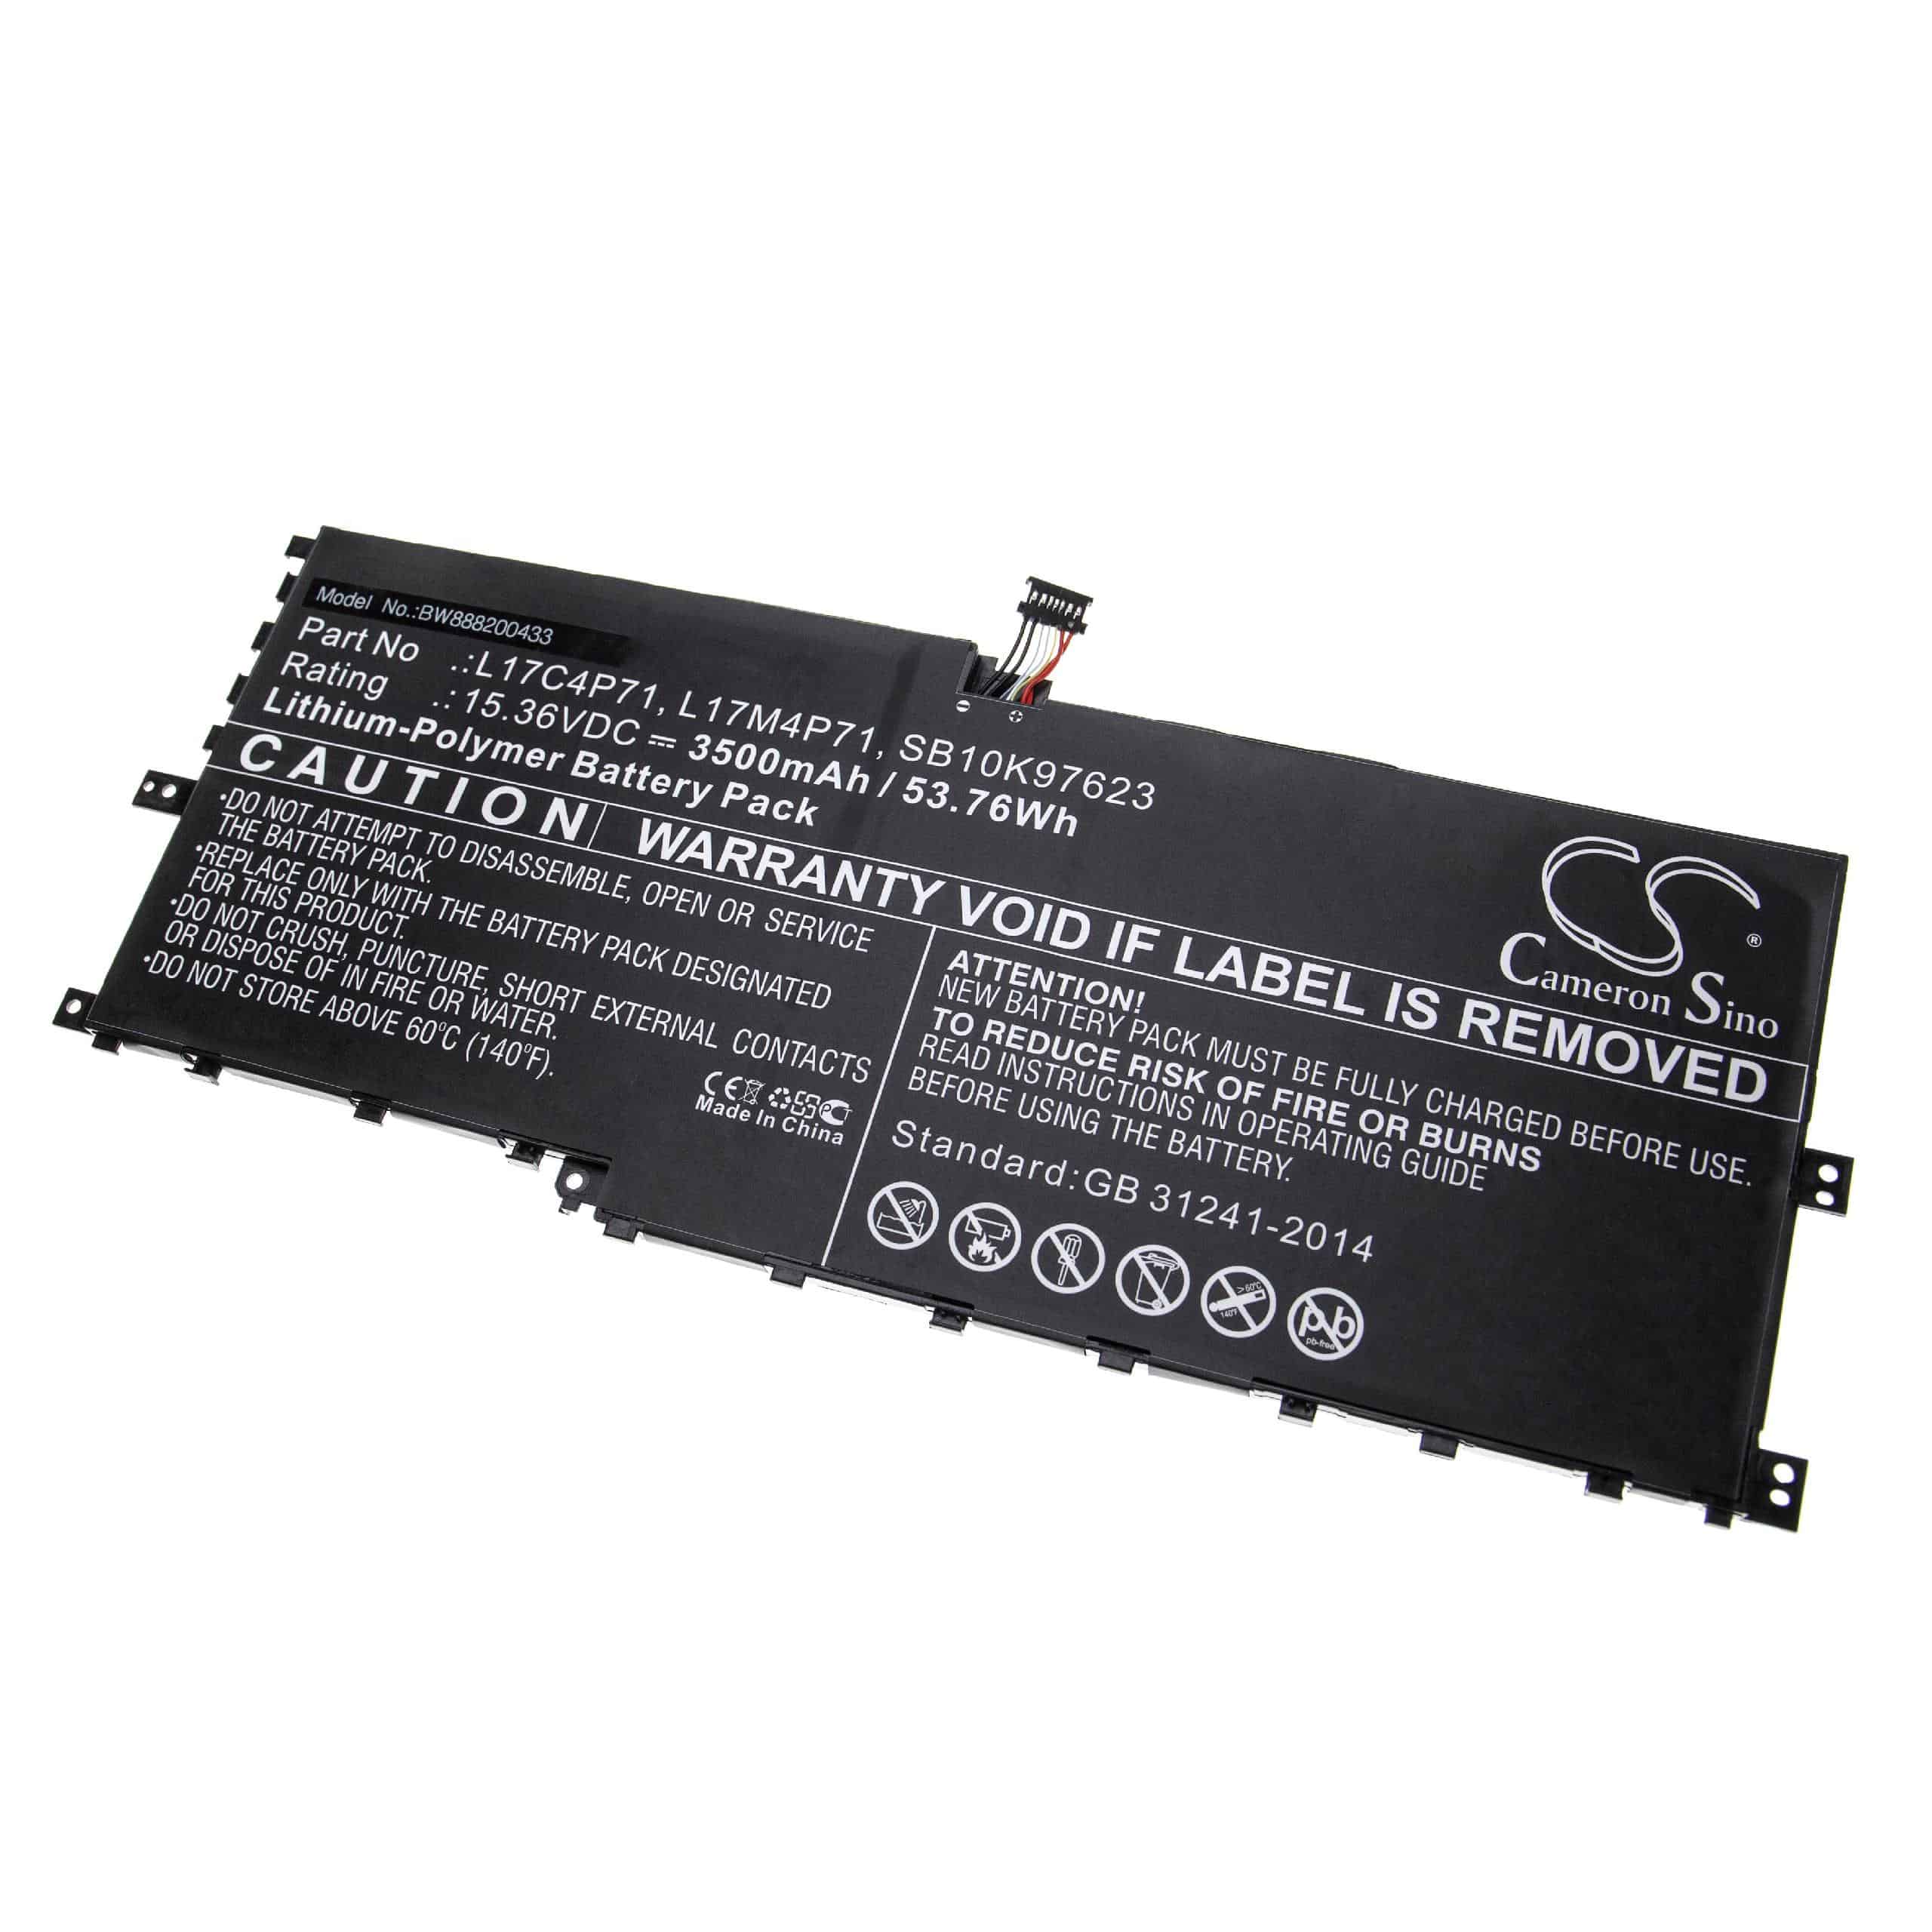 Akumulator do laptopa zamiennik Lenovo L17C4P71, L17M4P71, 01AV474, 01AV475, L17M4P73 - 3500 mAh 15,36 V LiPo